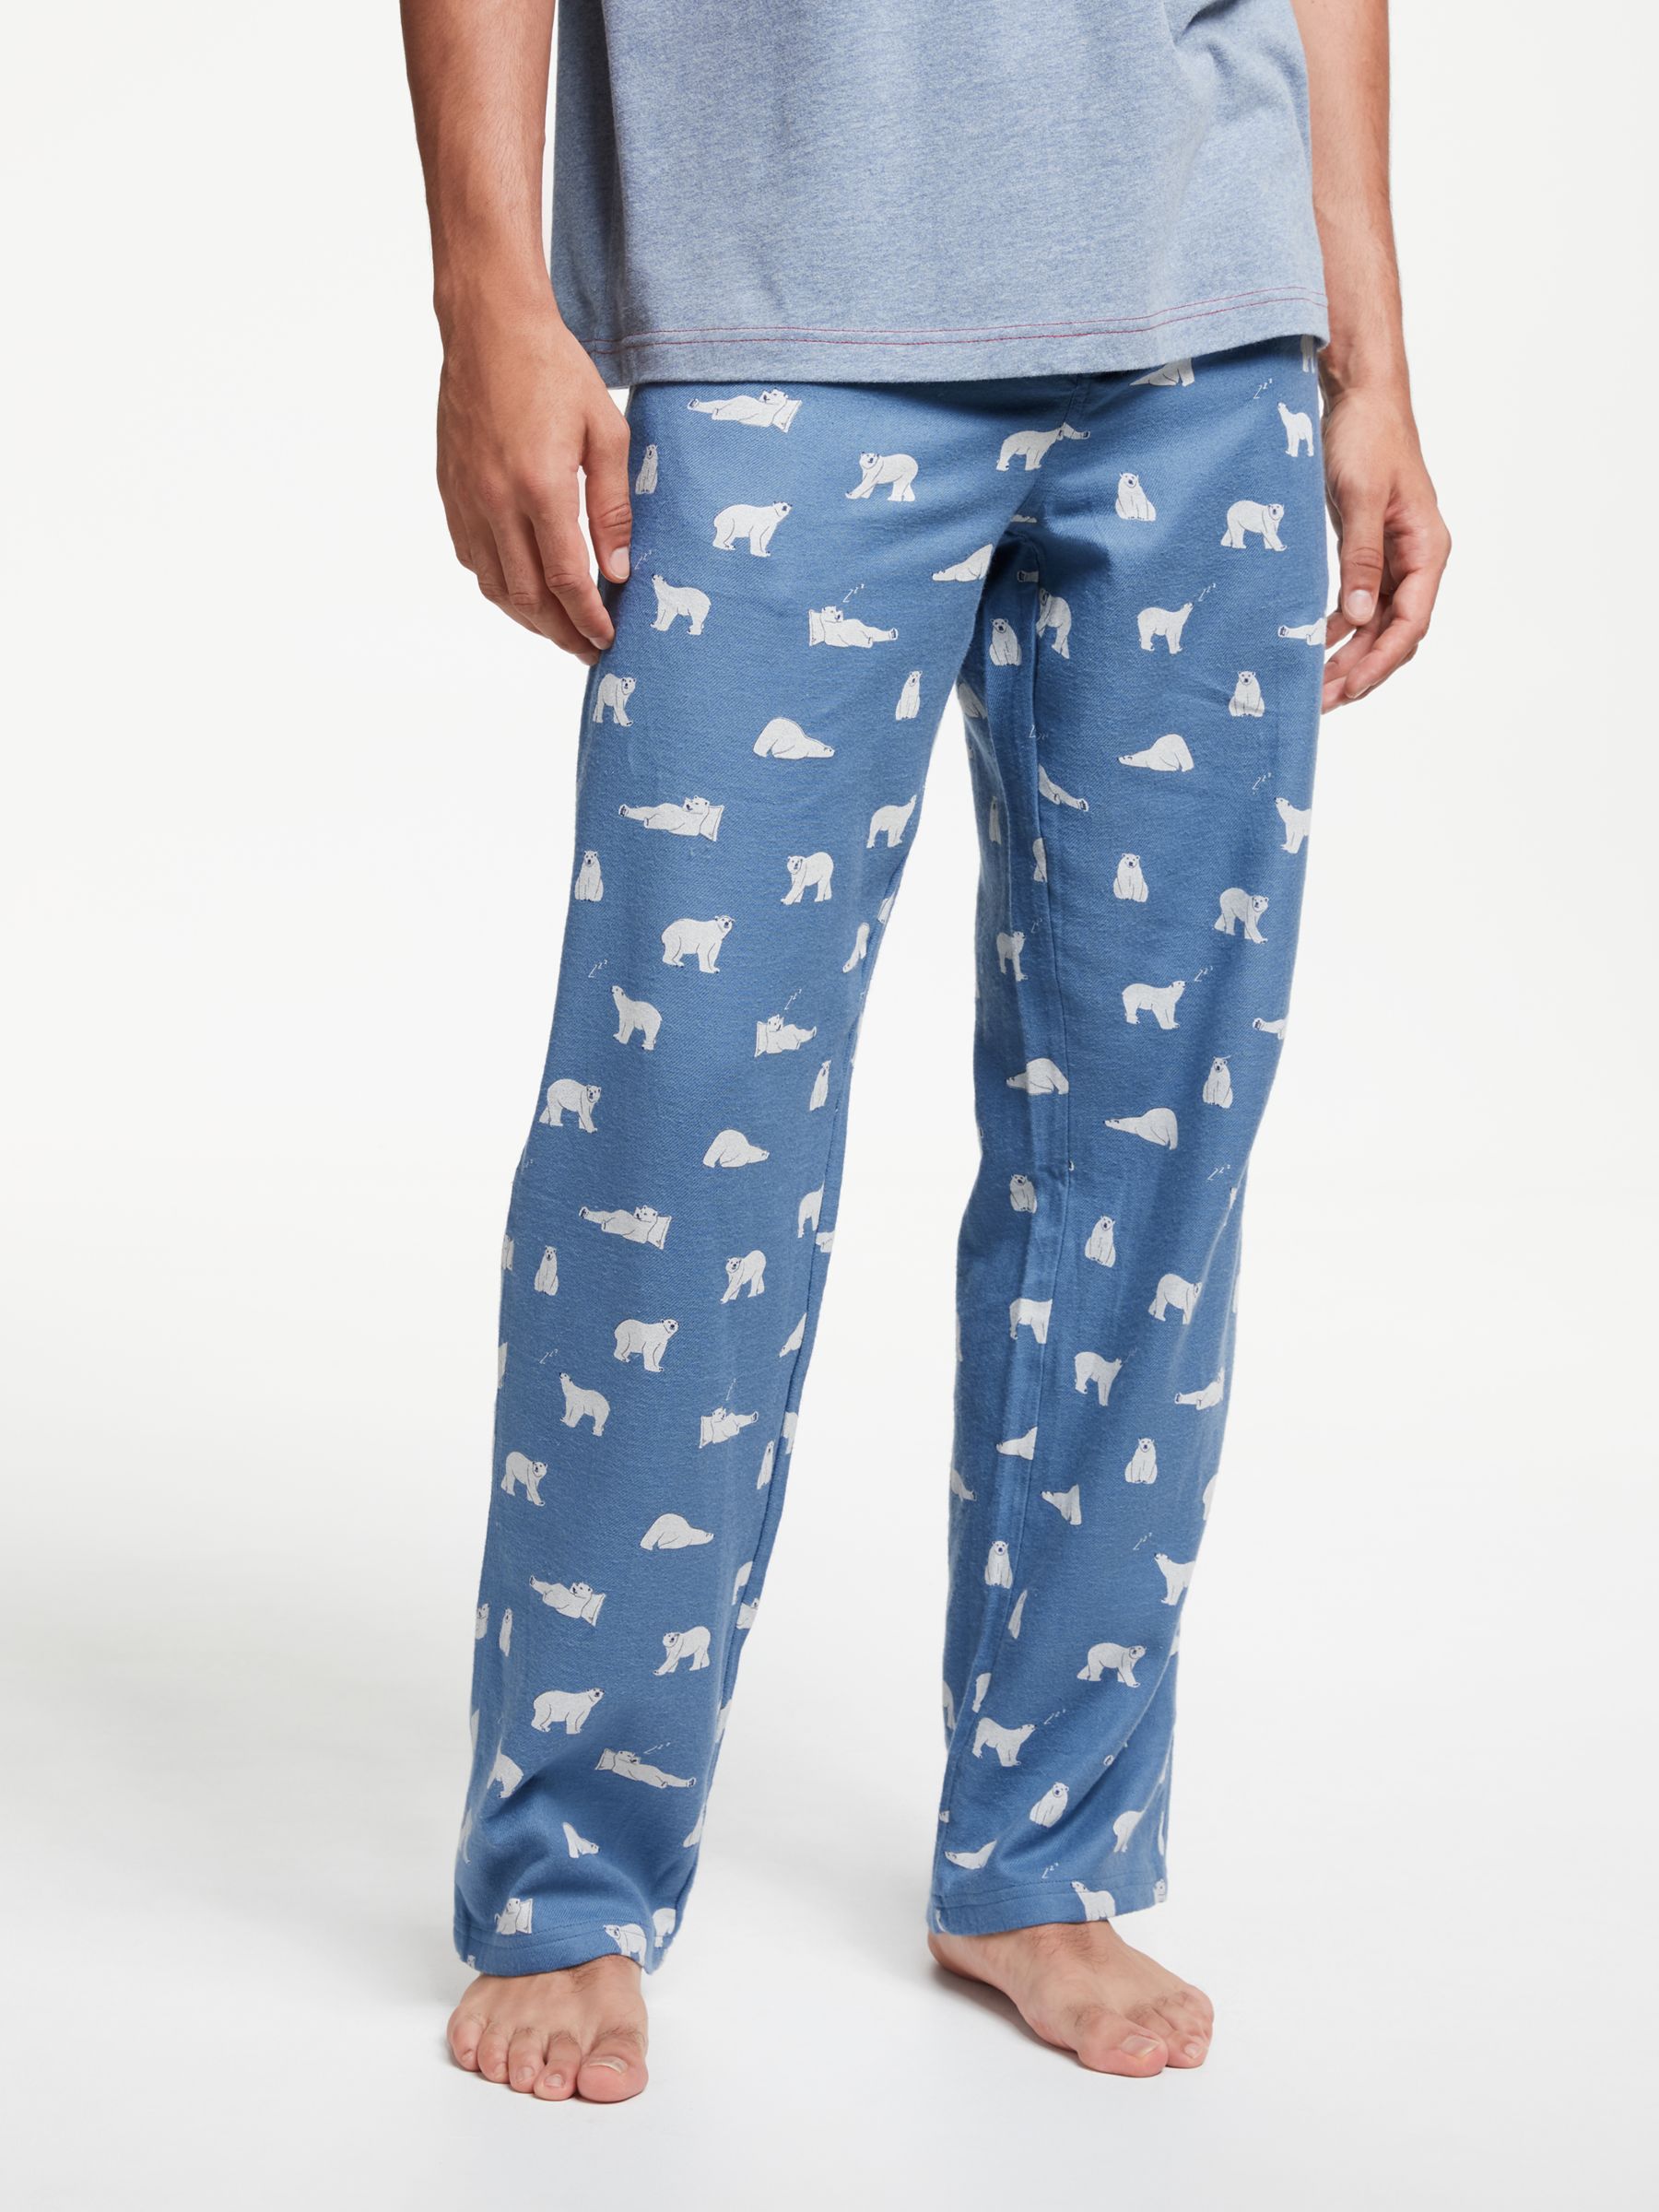 Fisyme Polar Bear Blue Mens Pajama Pants Men's Pajama Bottoms Soft